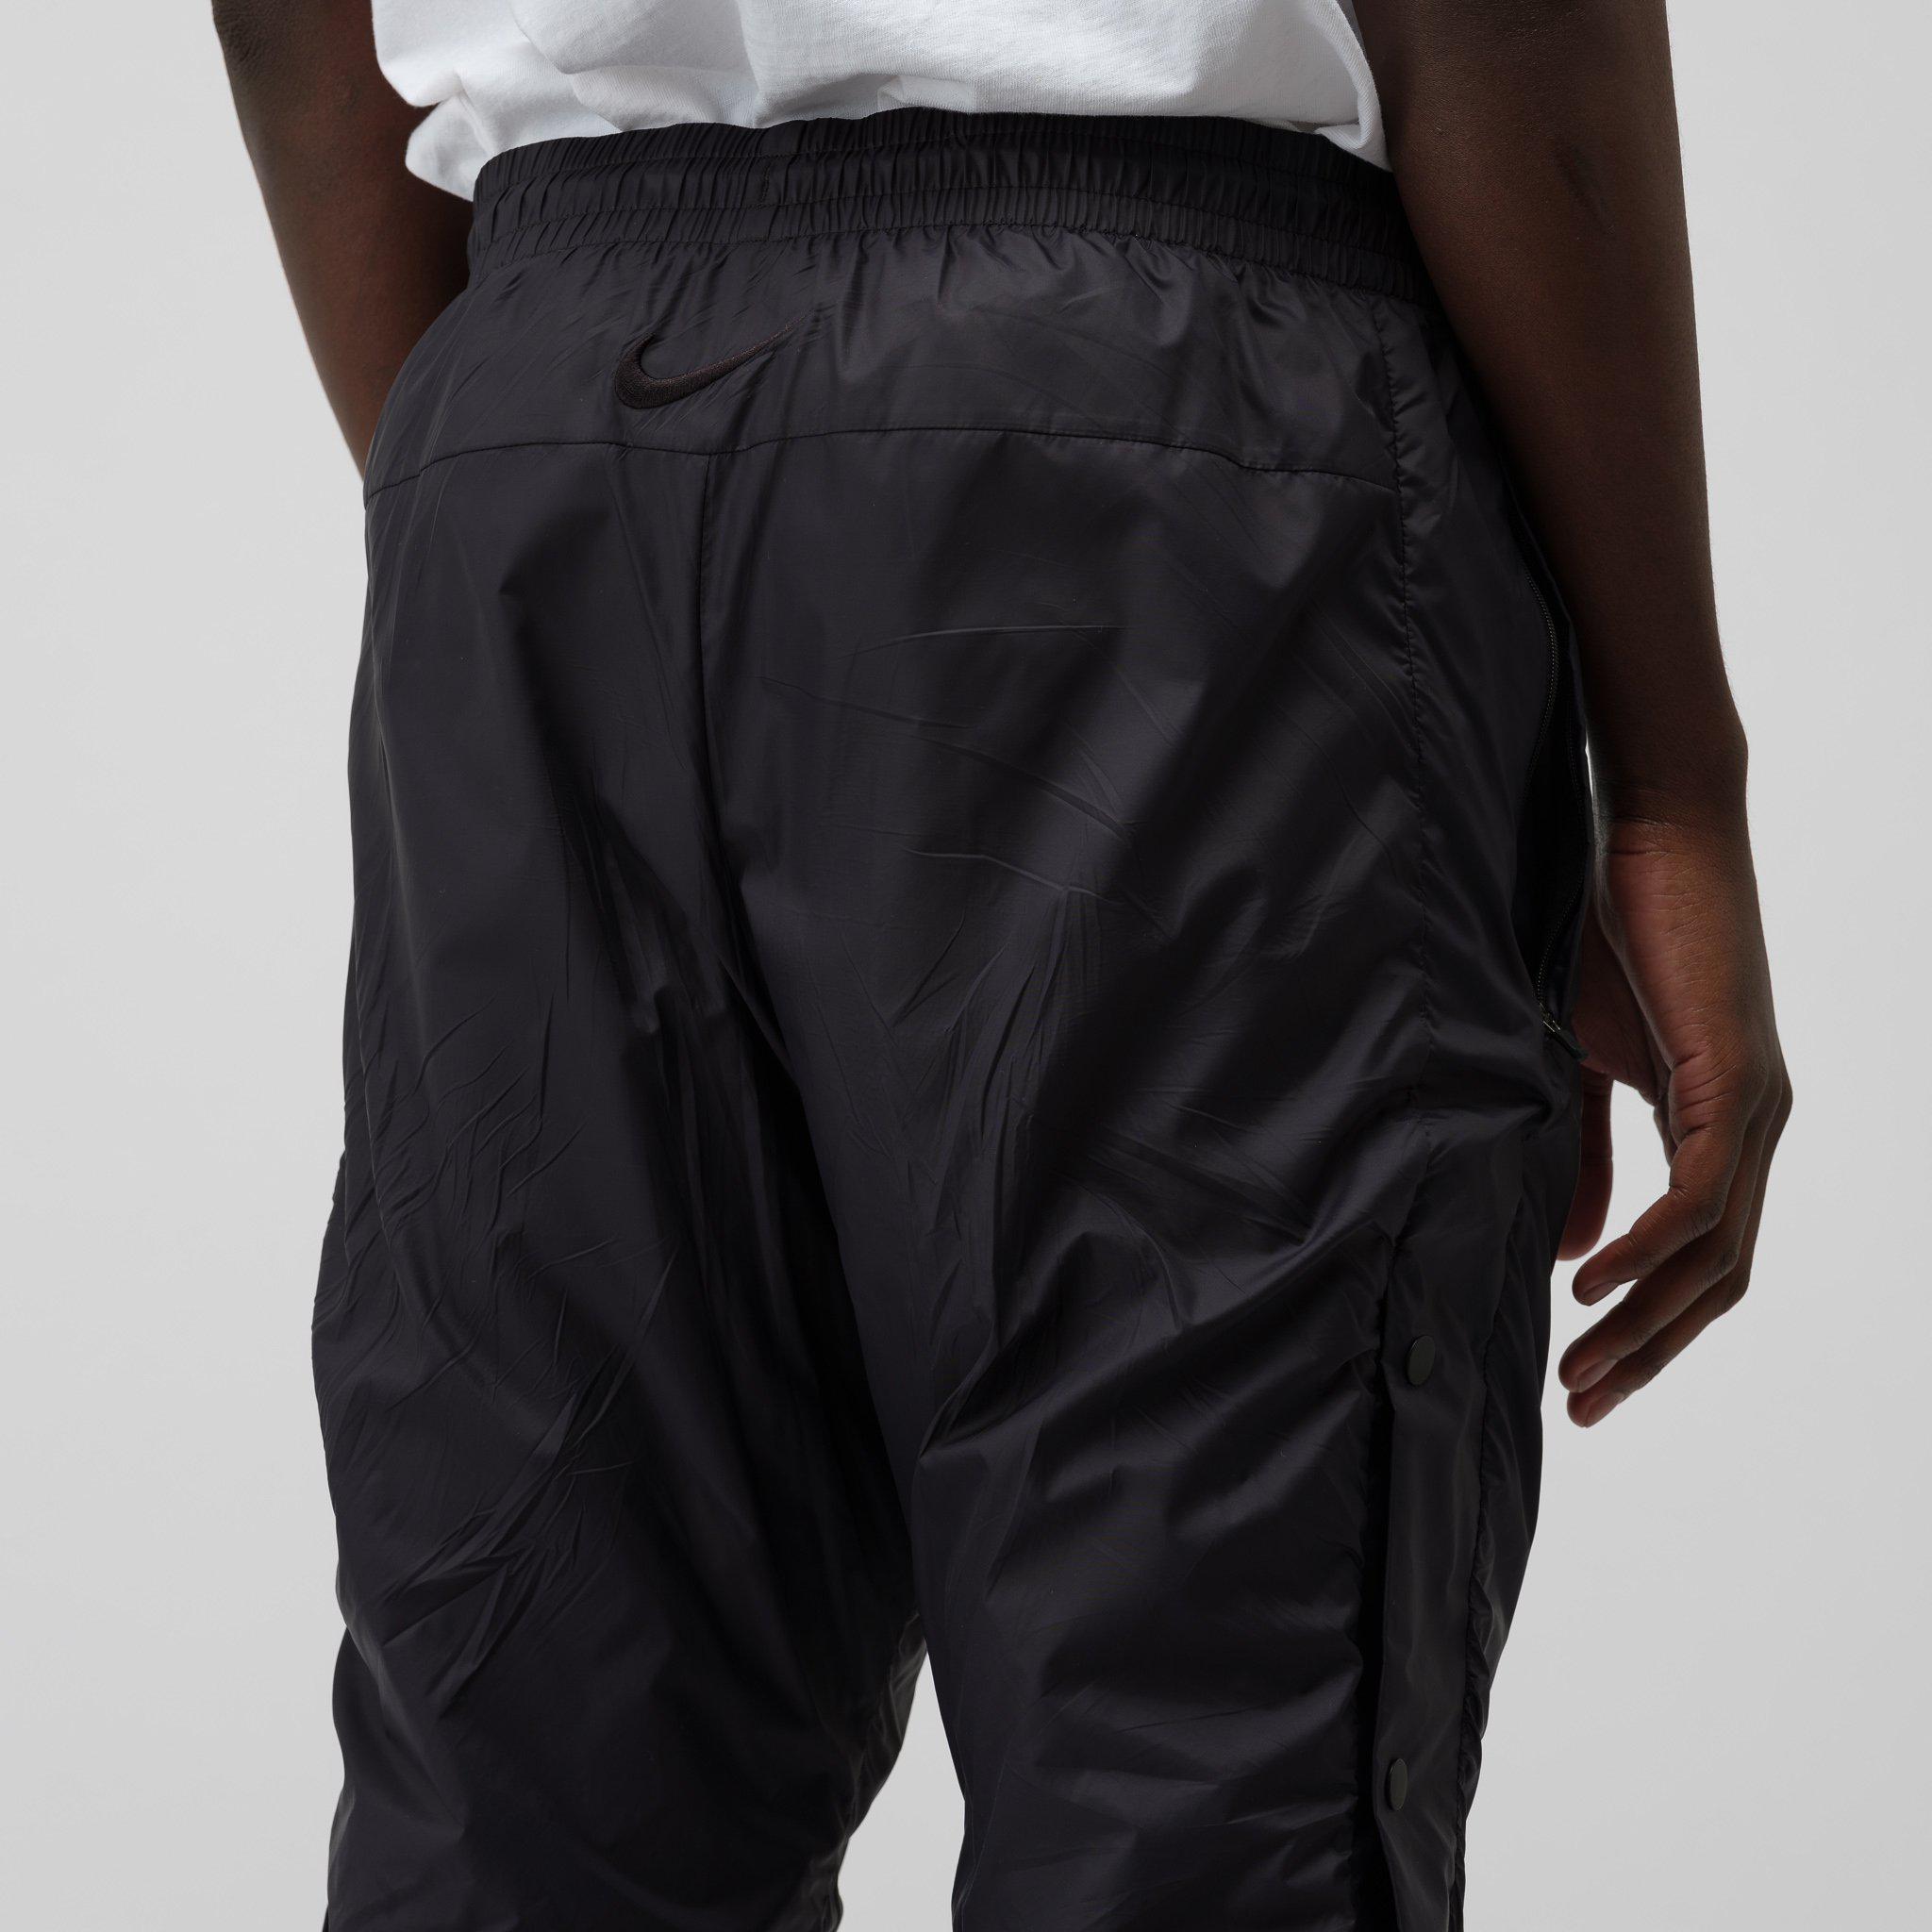 Nike Synthetic X Fear Of God Pants In Black for Men - Lyst